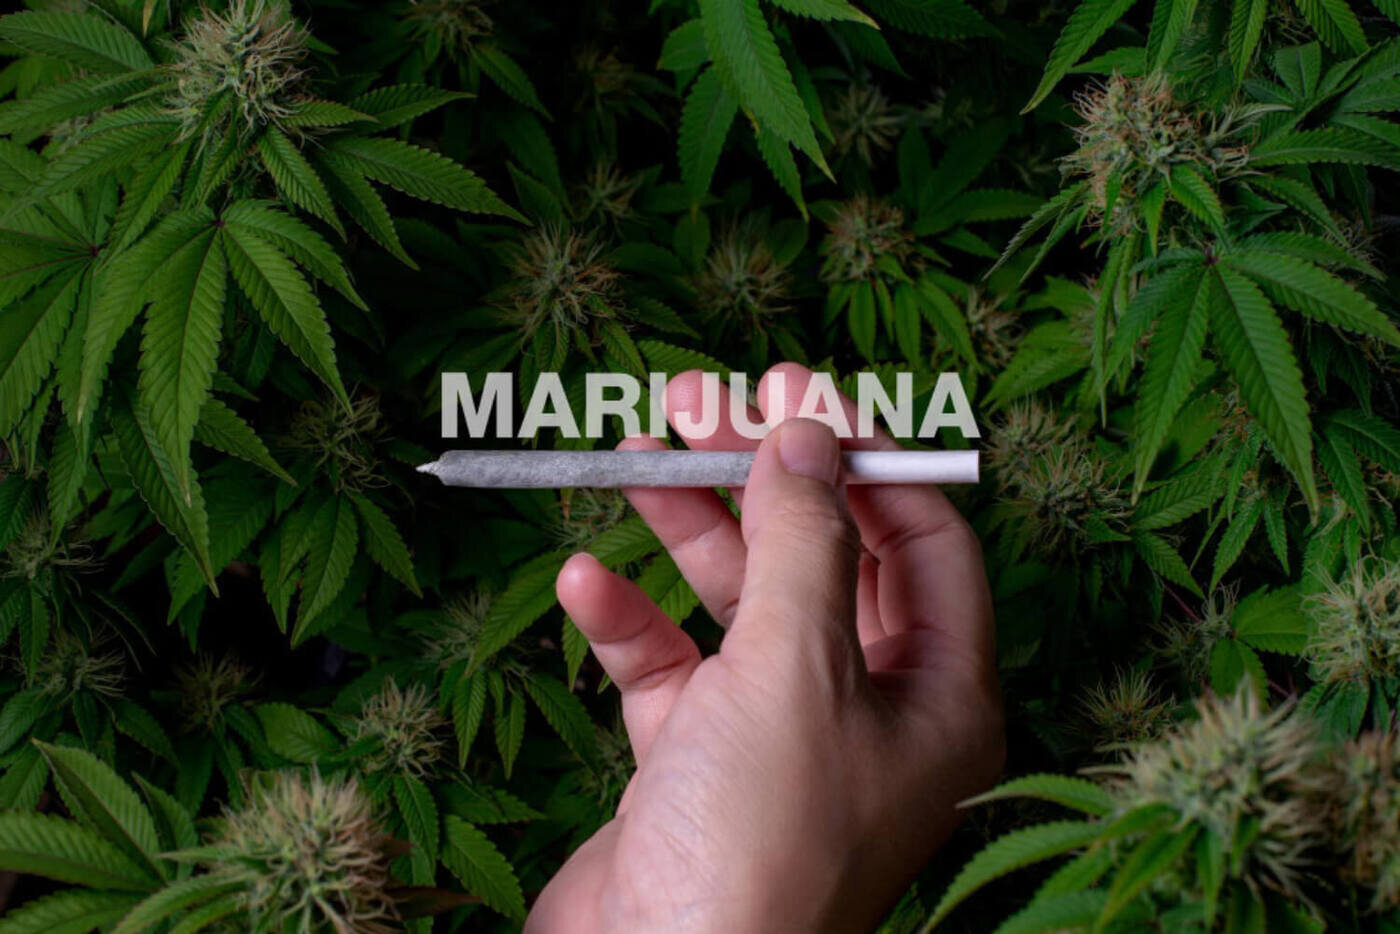 Marijuana crops